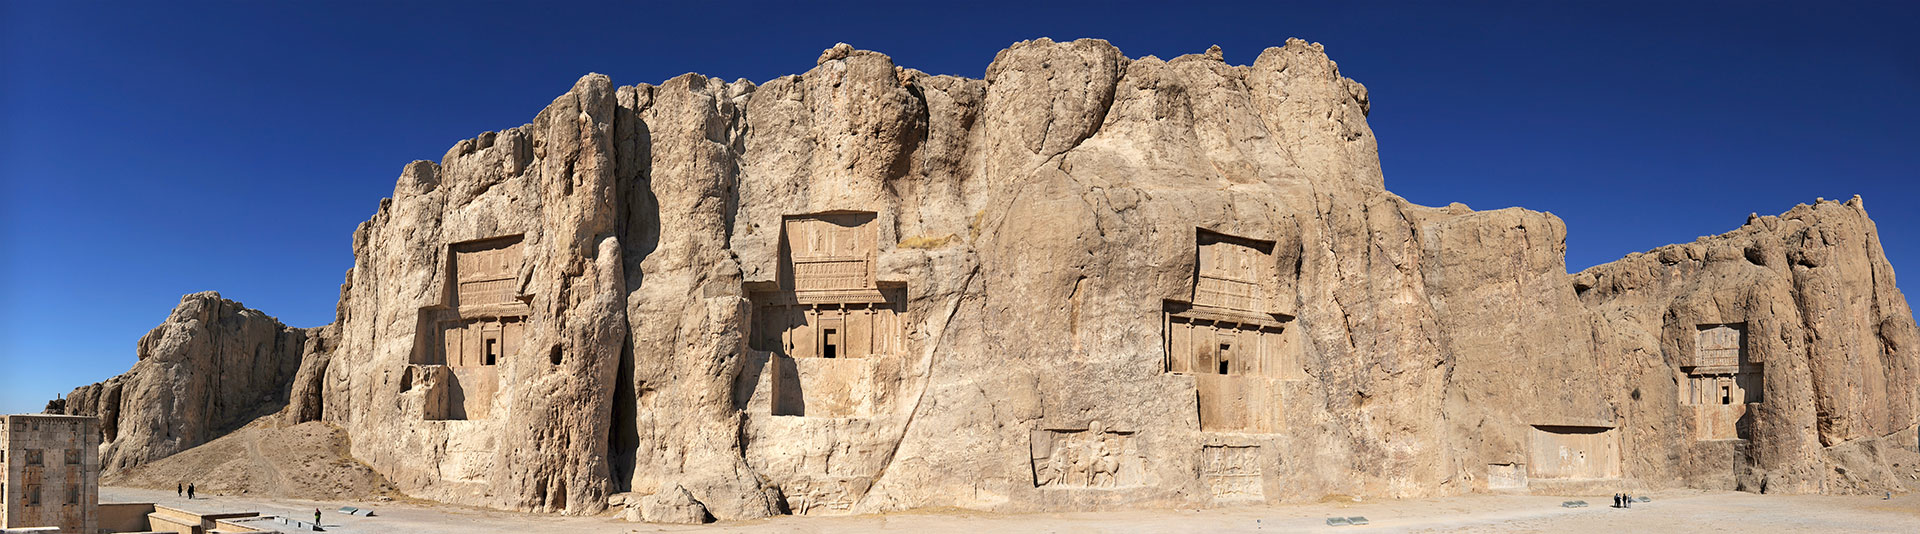 Panoramatický pohled na hrobky v Nakš-e Rustam.